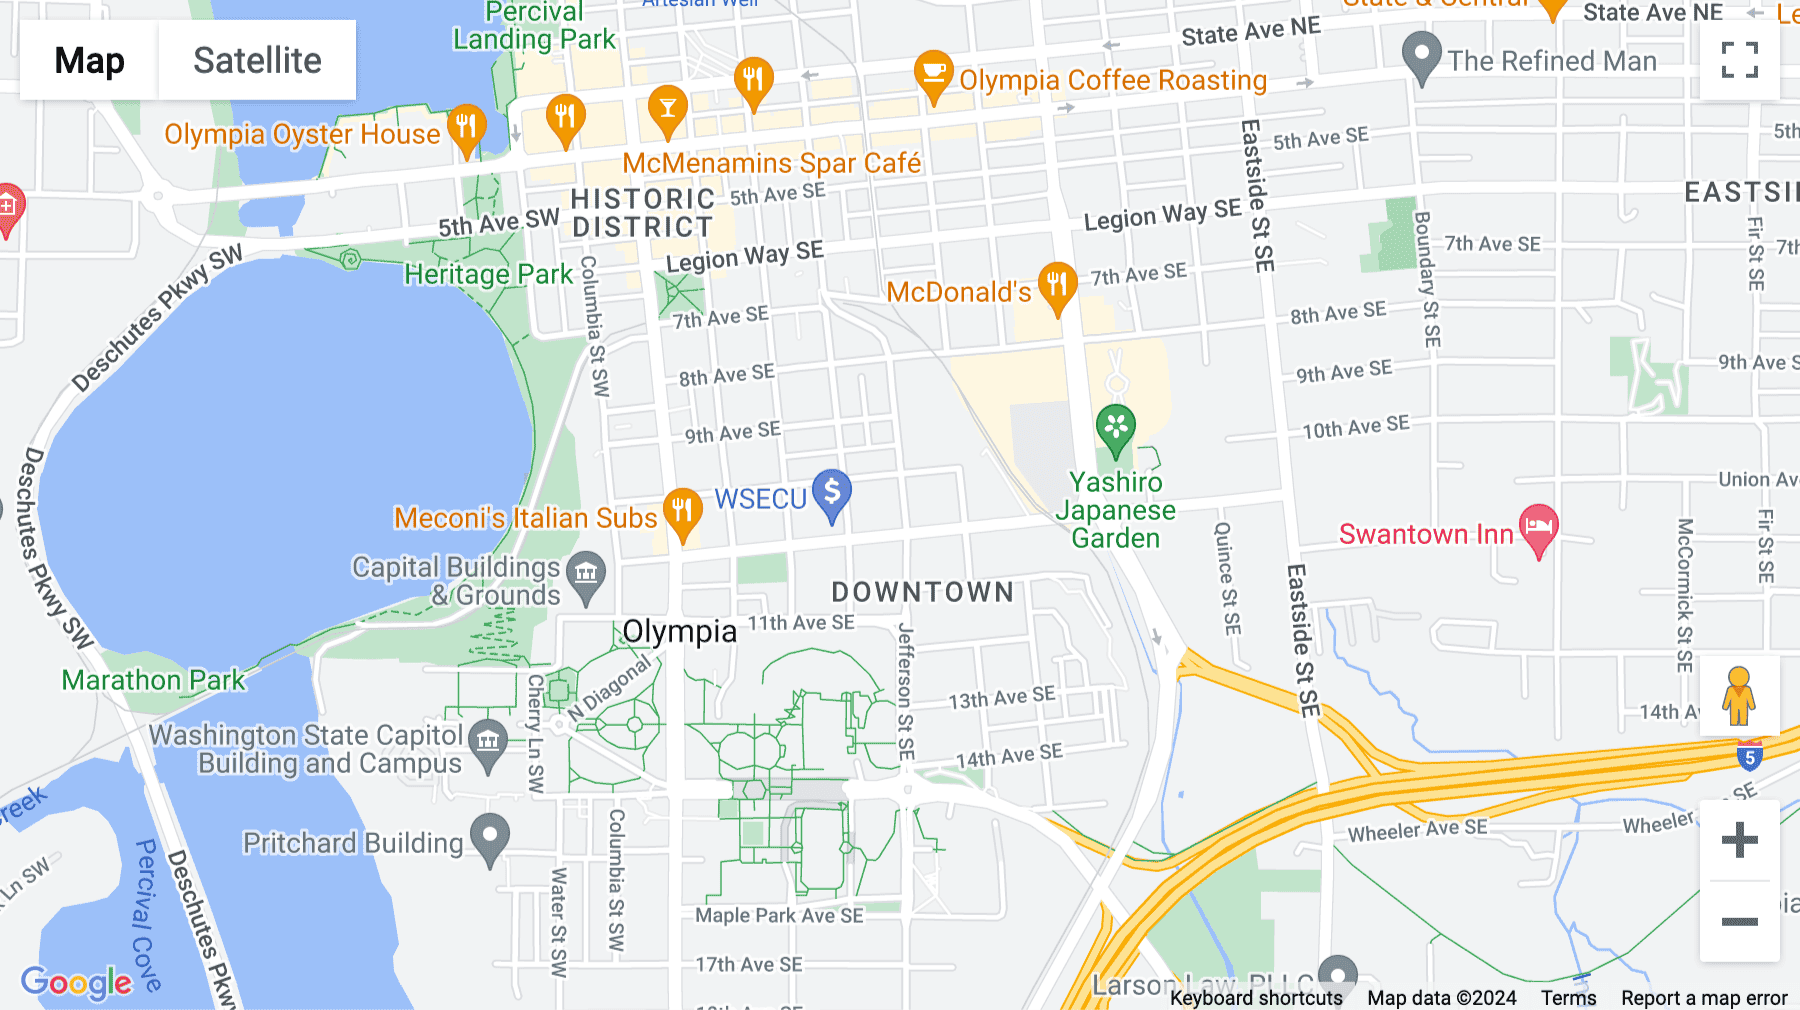 Click for interative map of Union 400, 400 Union Avenue SE, Olympia, Washington, Olympia